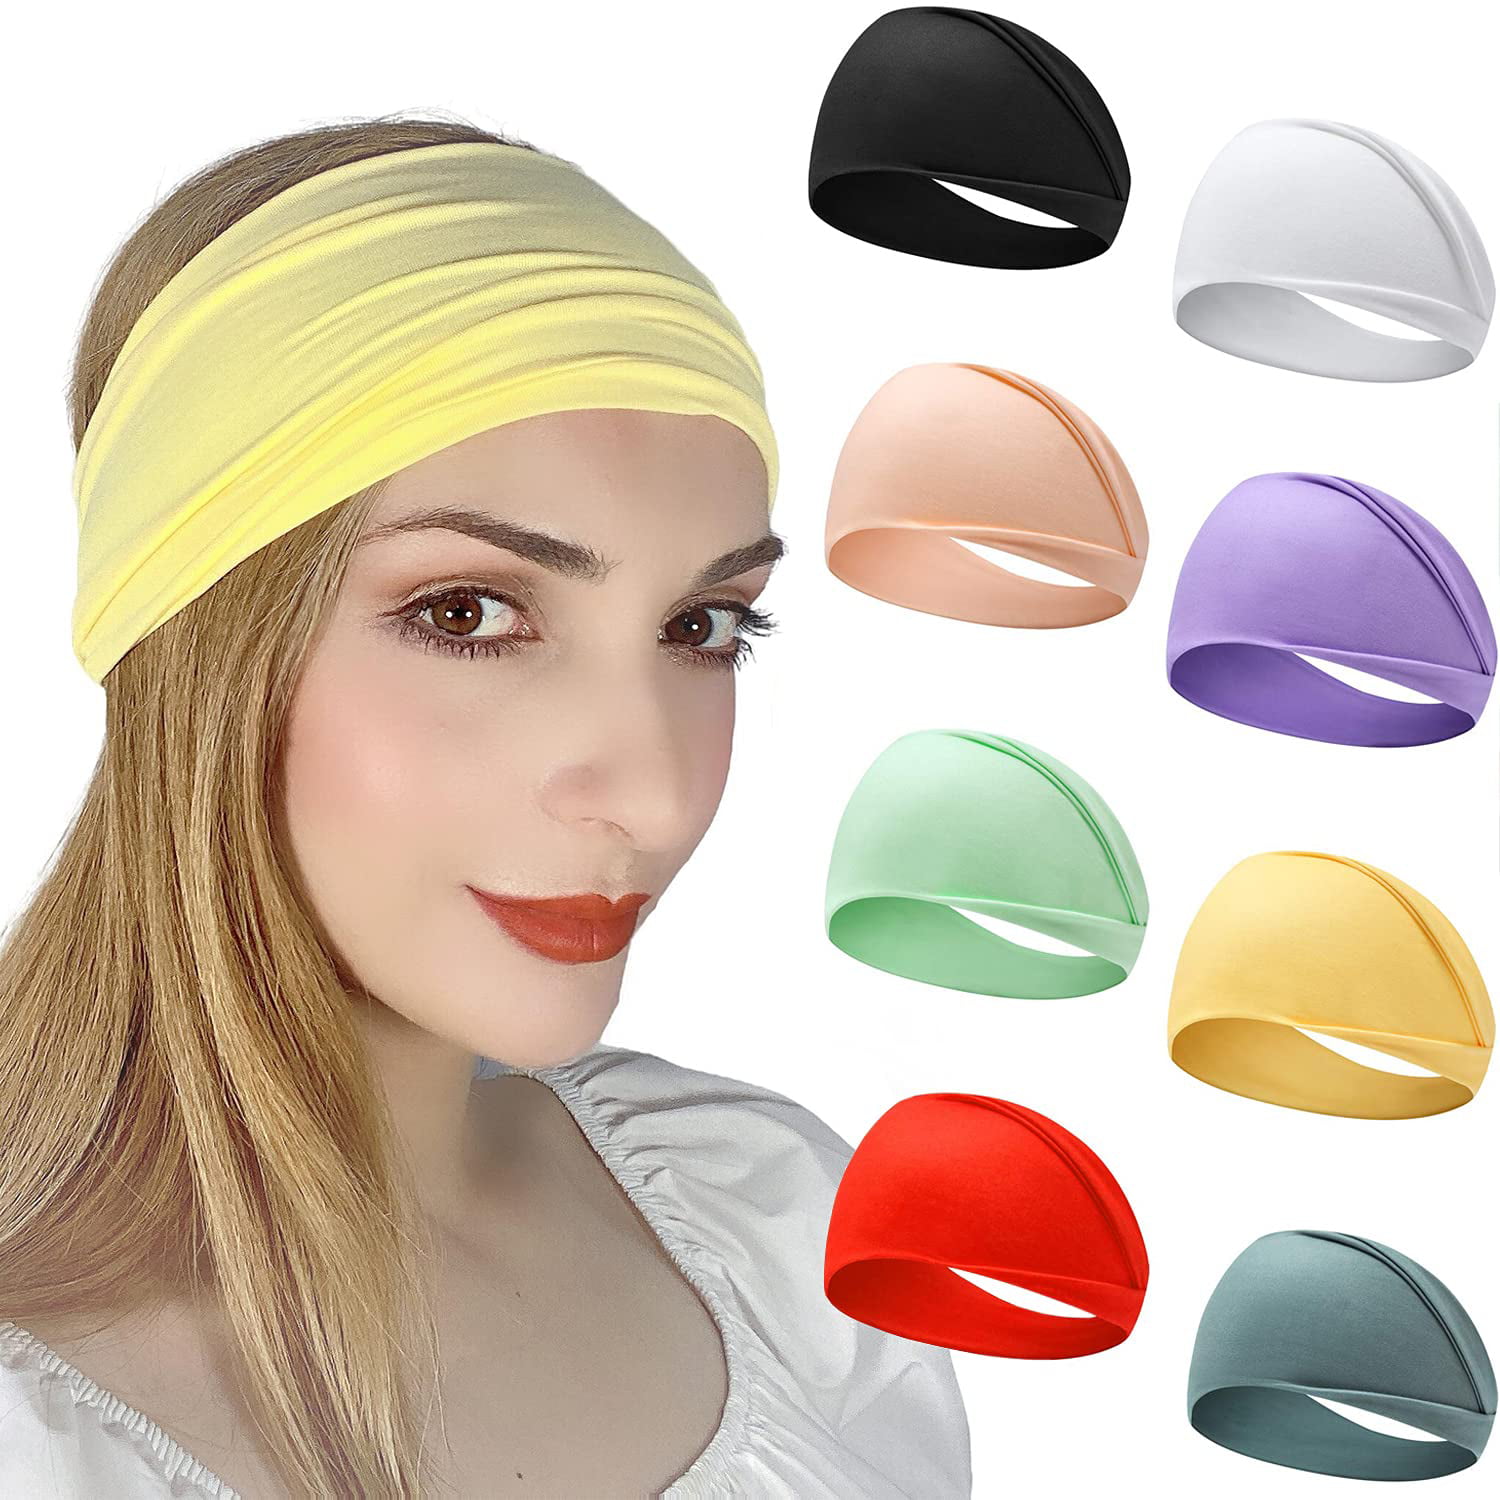 Wide Headband Plain Yoga Hair Band Soft Elastic Running Fitness Headbands Hair Accessories for Women 6 Pack Kavya Headbands Women